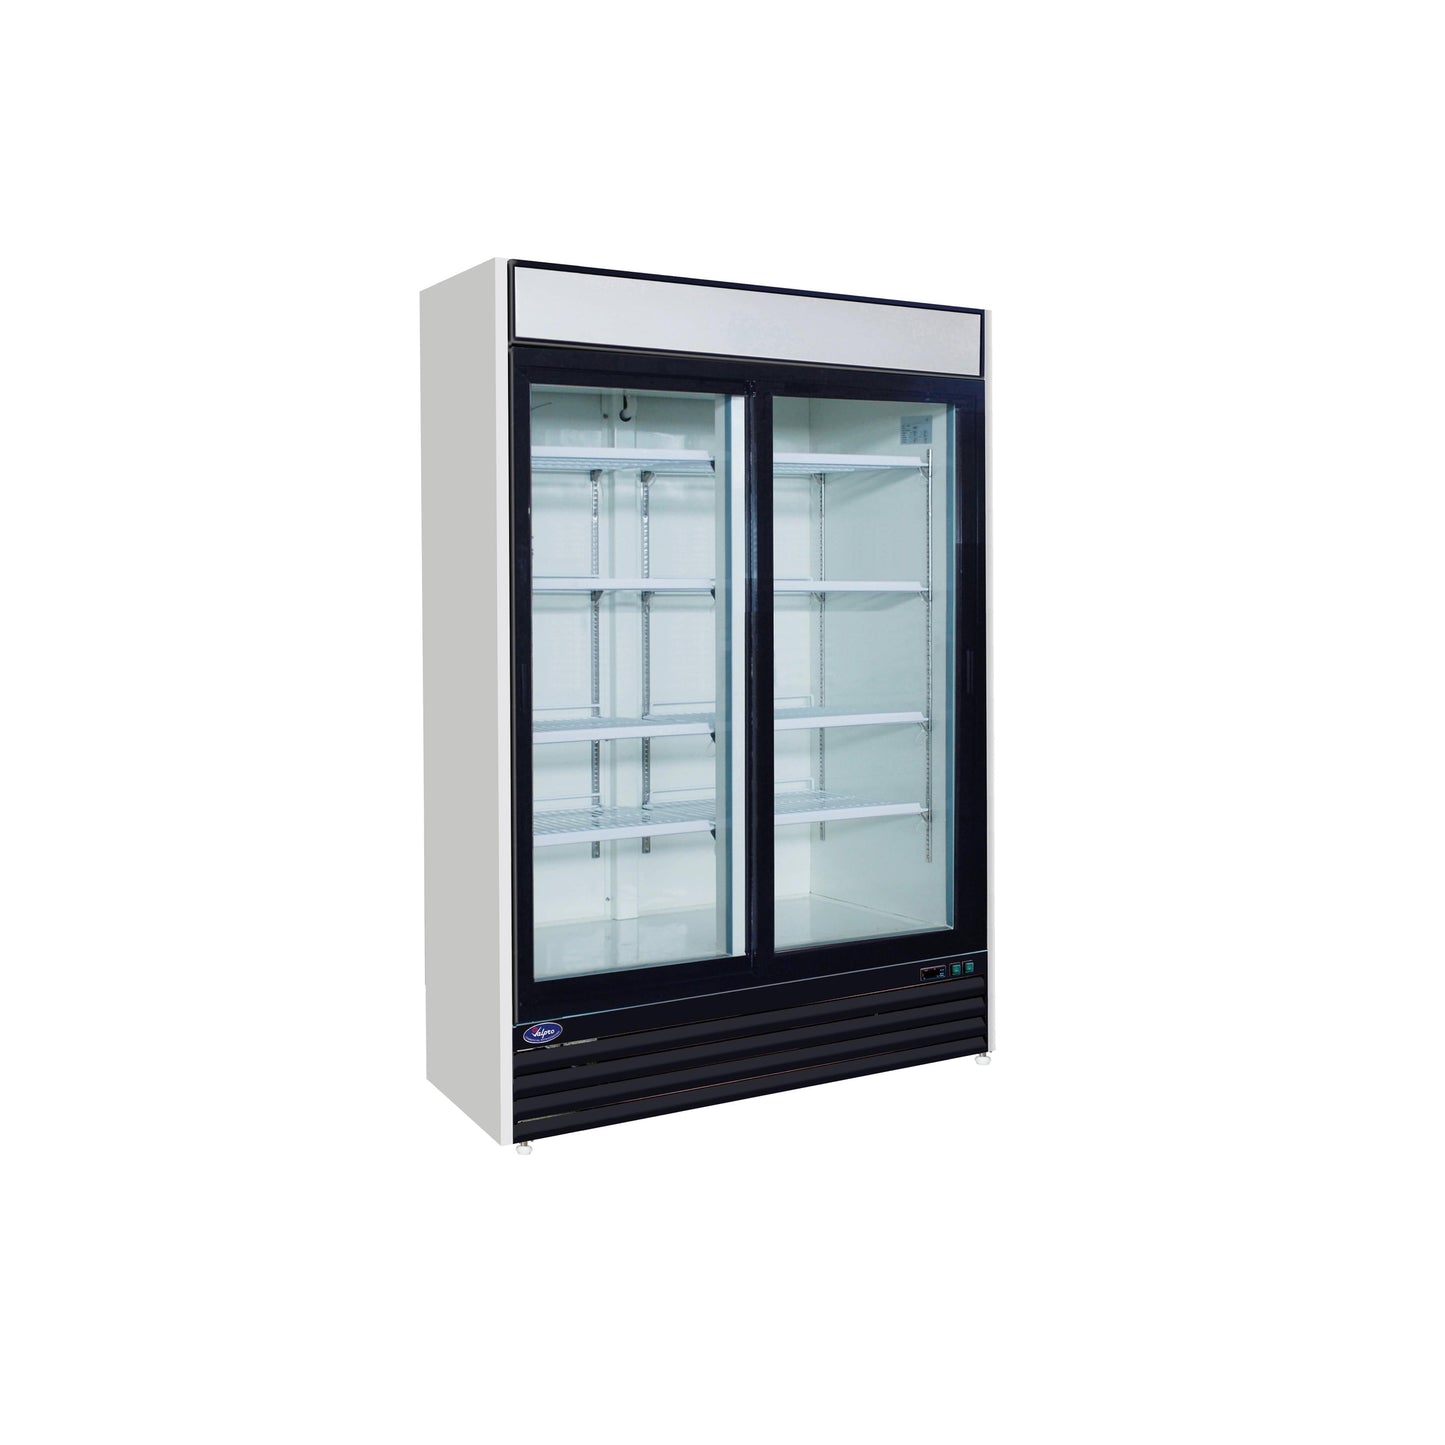 Valpro 48 cu.ft. Merchandiser Refrigerator With 2 Sliding Glass Doors